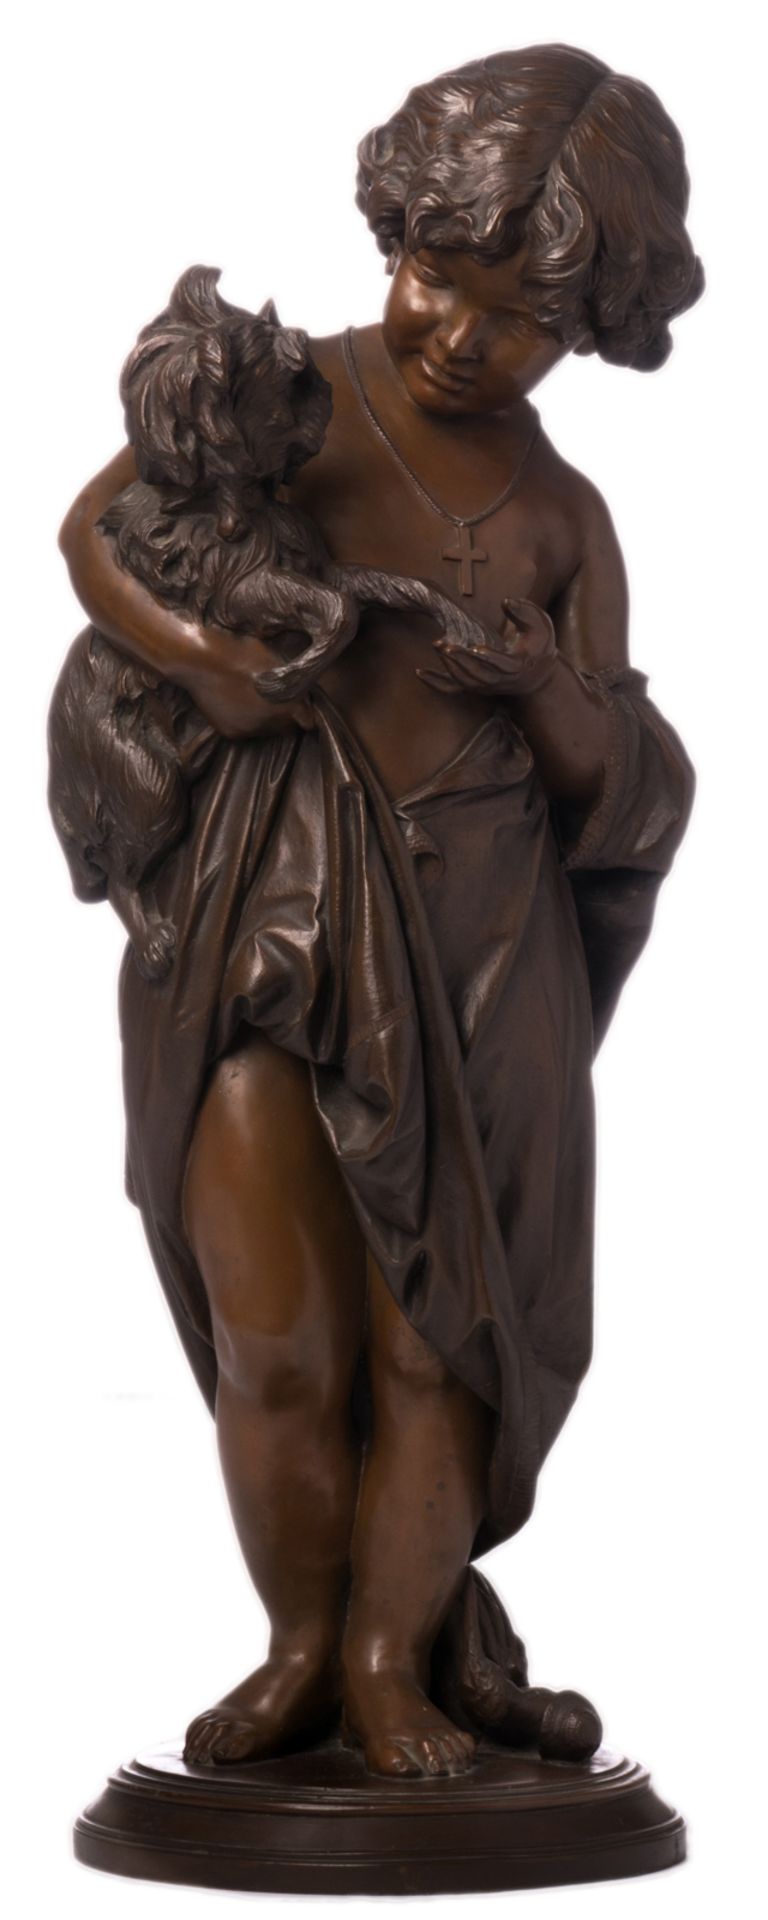 Barzaghi F., true friendship, patinated bronze, dated 'Milano 1870', H 101 cm